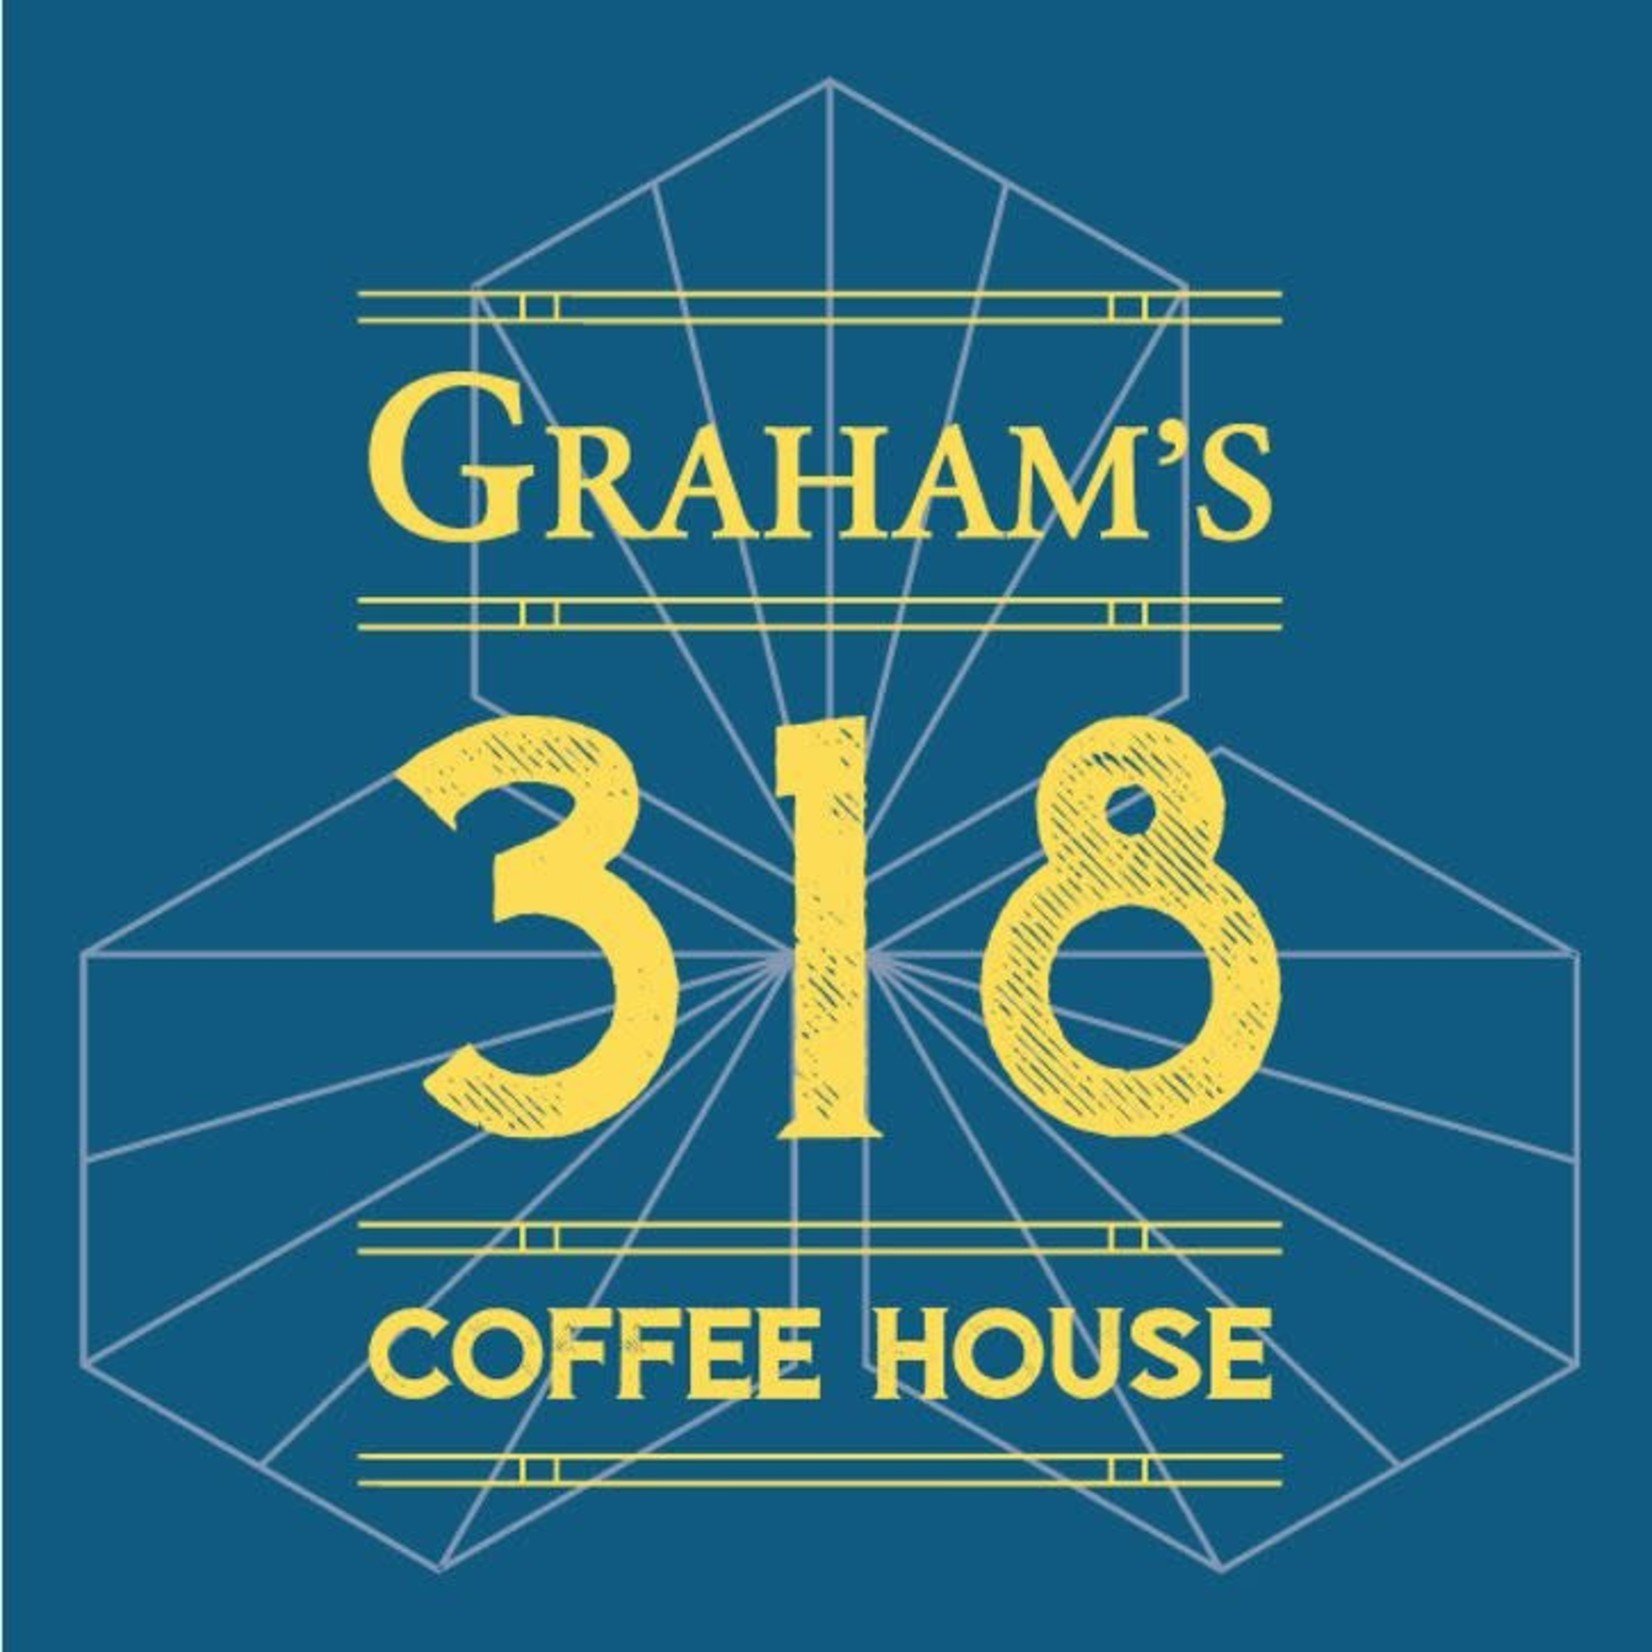 Graham's 318 Coffee House-Geneva Graham's 318 Coffee House-Geneva $5.00 Merchandise Certificate